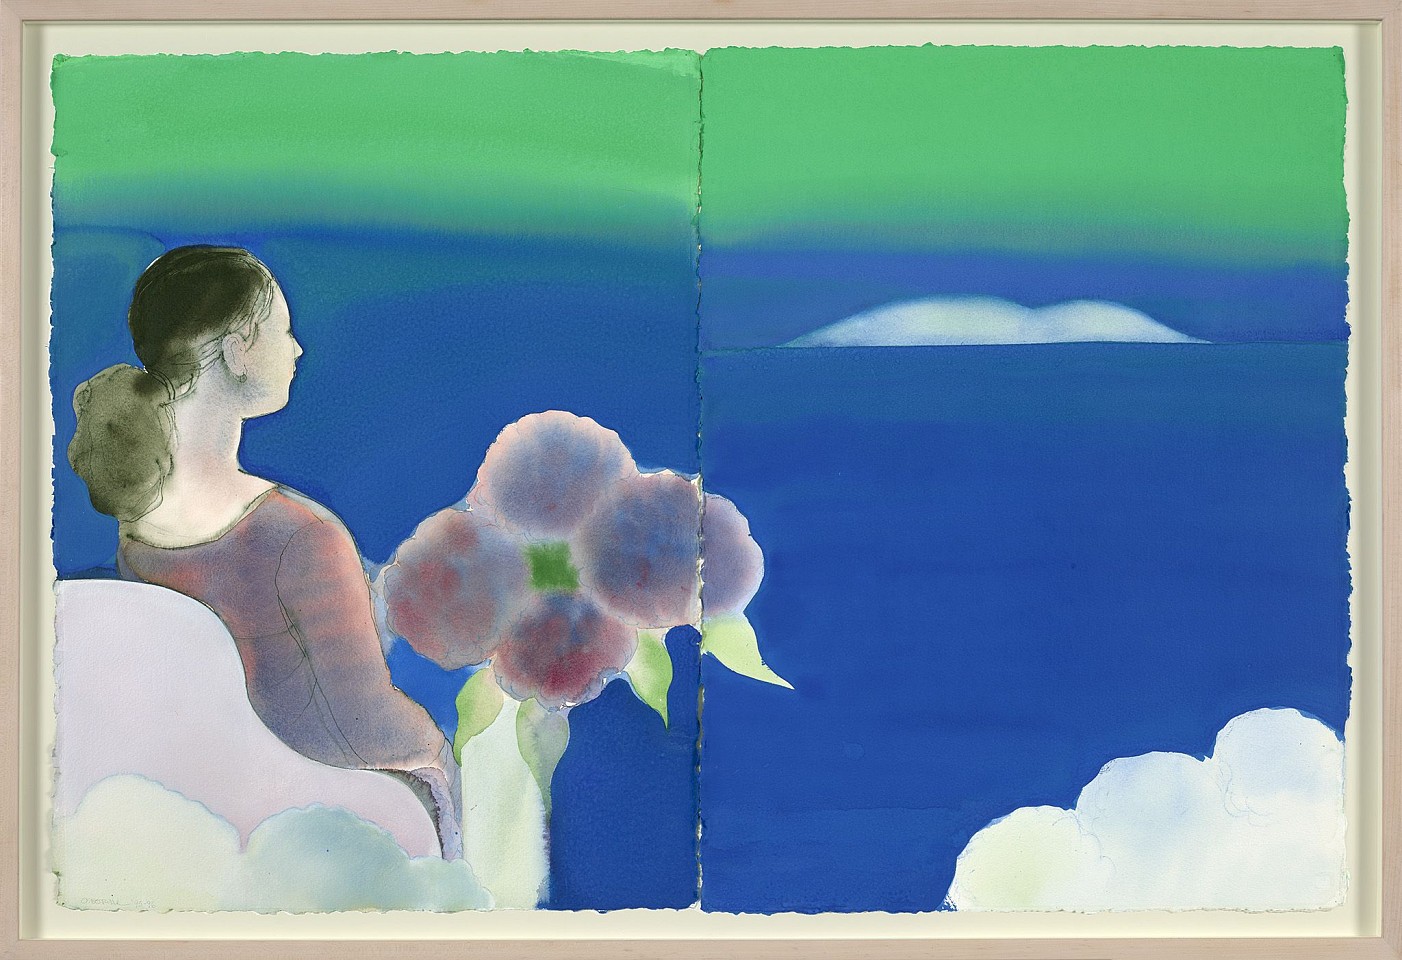 Elizabeth Osborne, View of the Sea, 1996
Watercolor on paper, 34 x 50 in. (86.4 x 127 cm)
OSB-00269